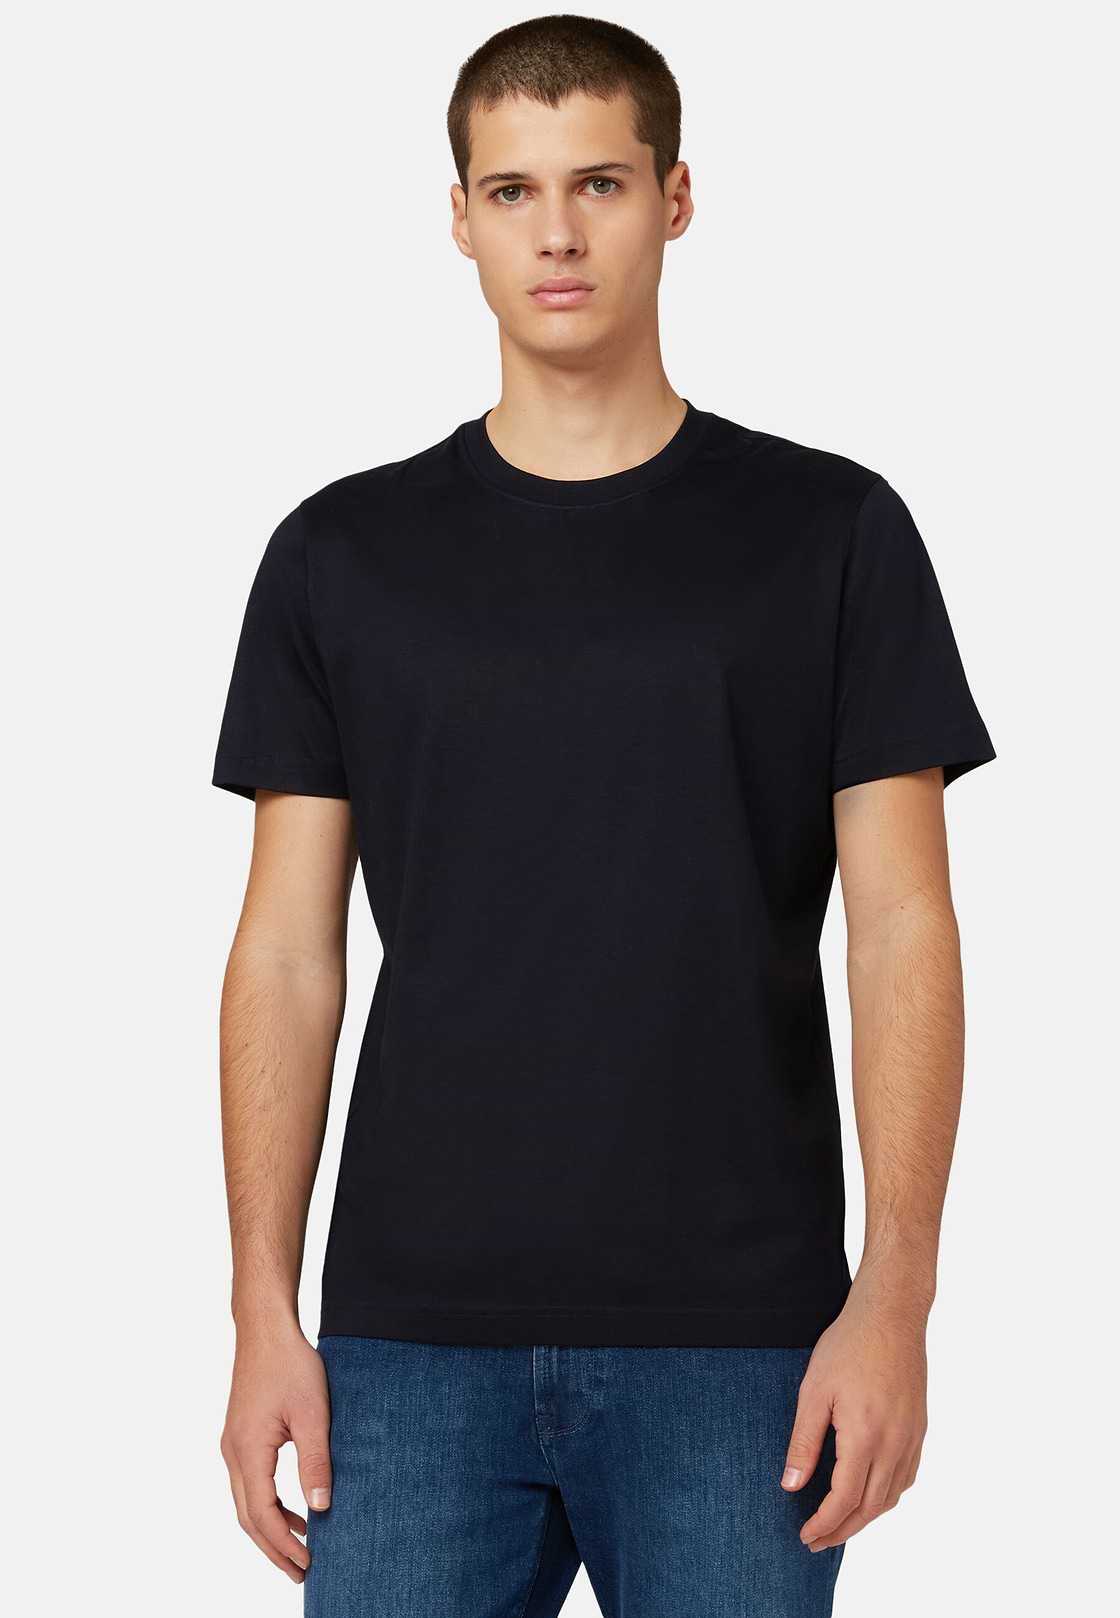 Pima Cotton Jersey T-shirt, Navy blue, hi-res